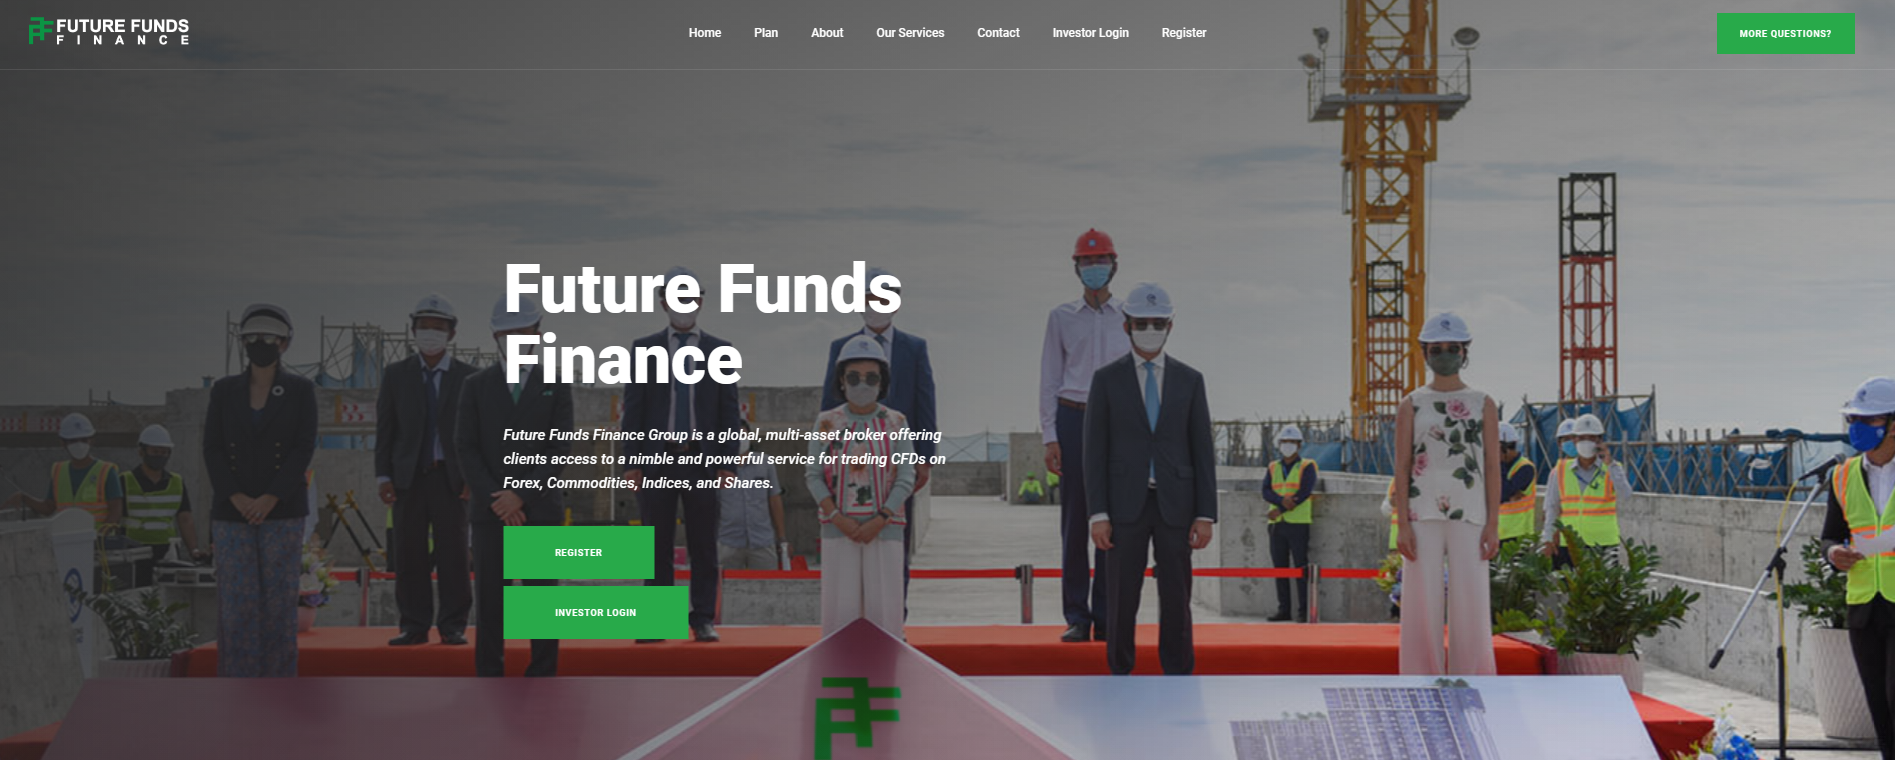 Future-Funds-Finance-homepage